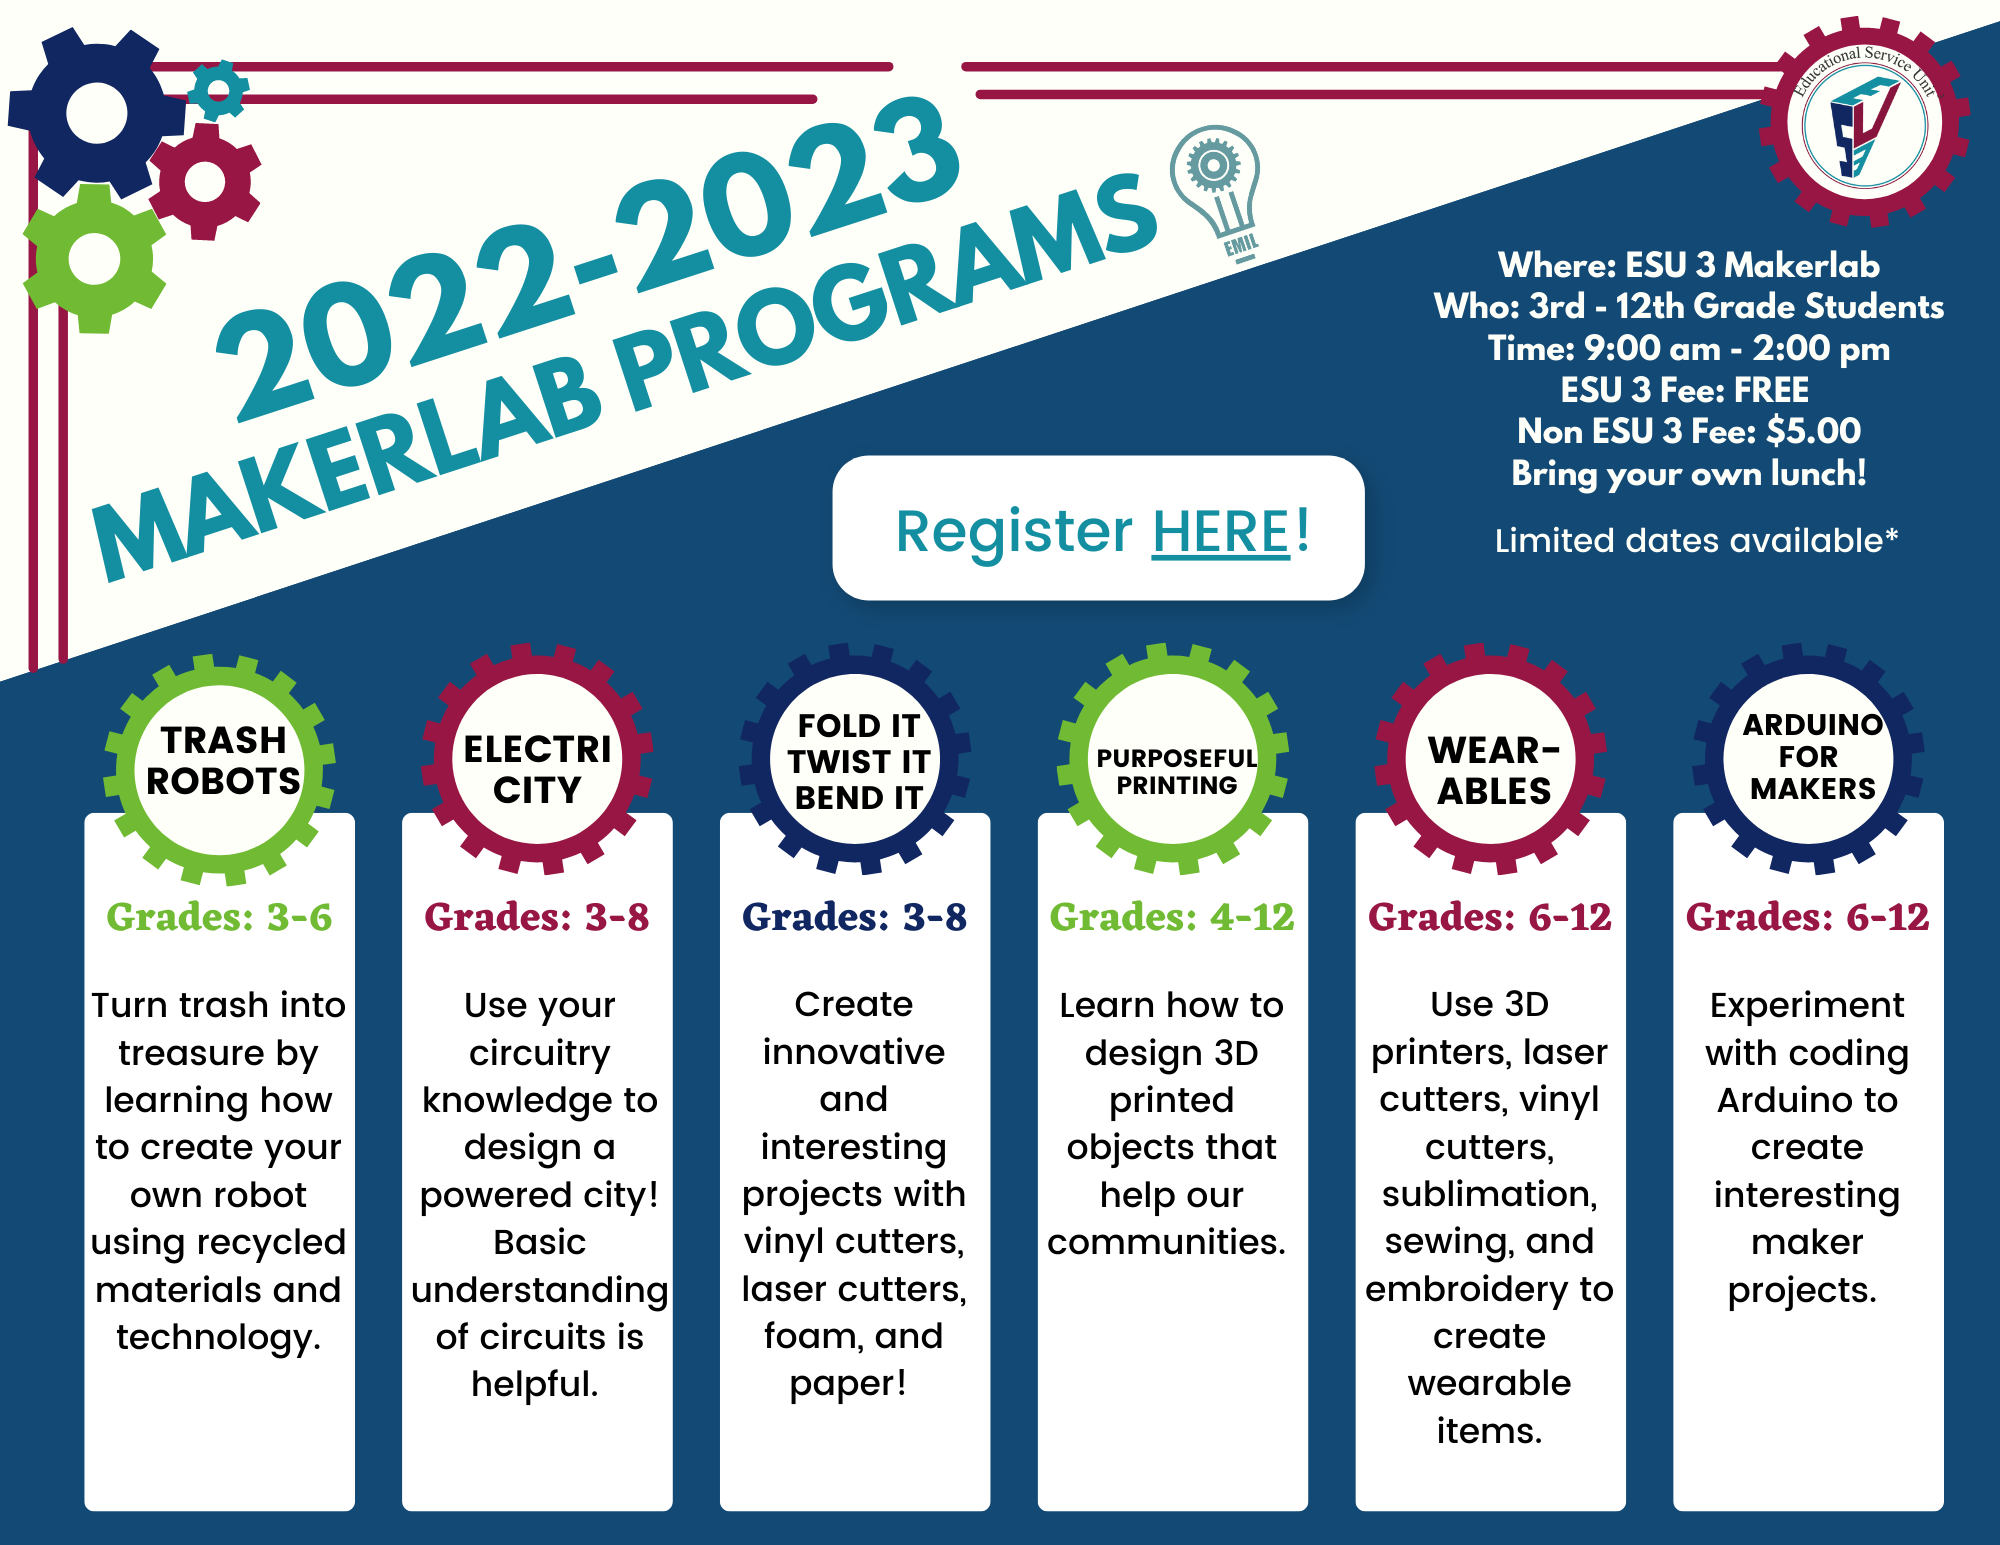 Click here to register for Makerlab Programs